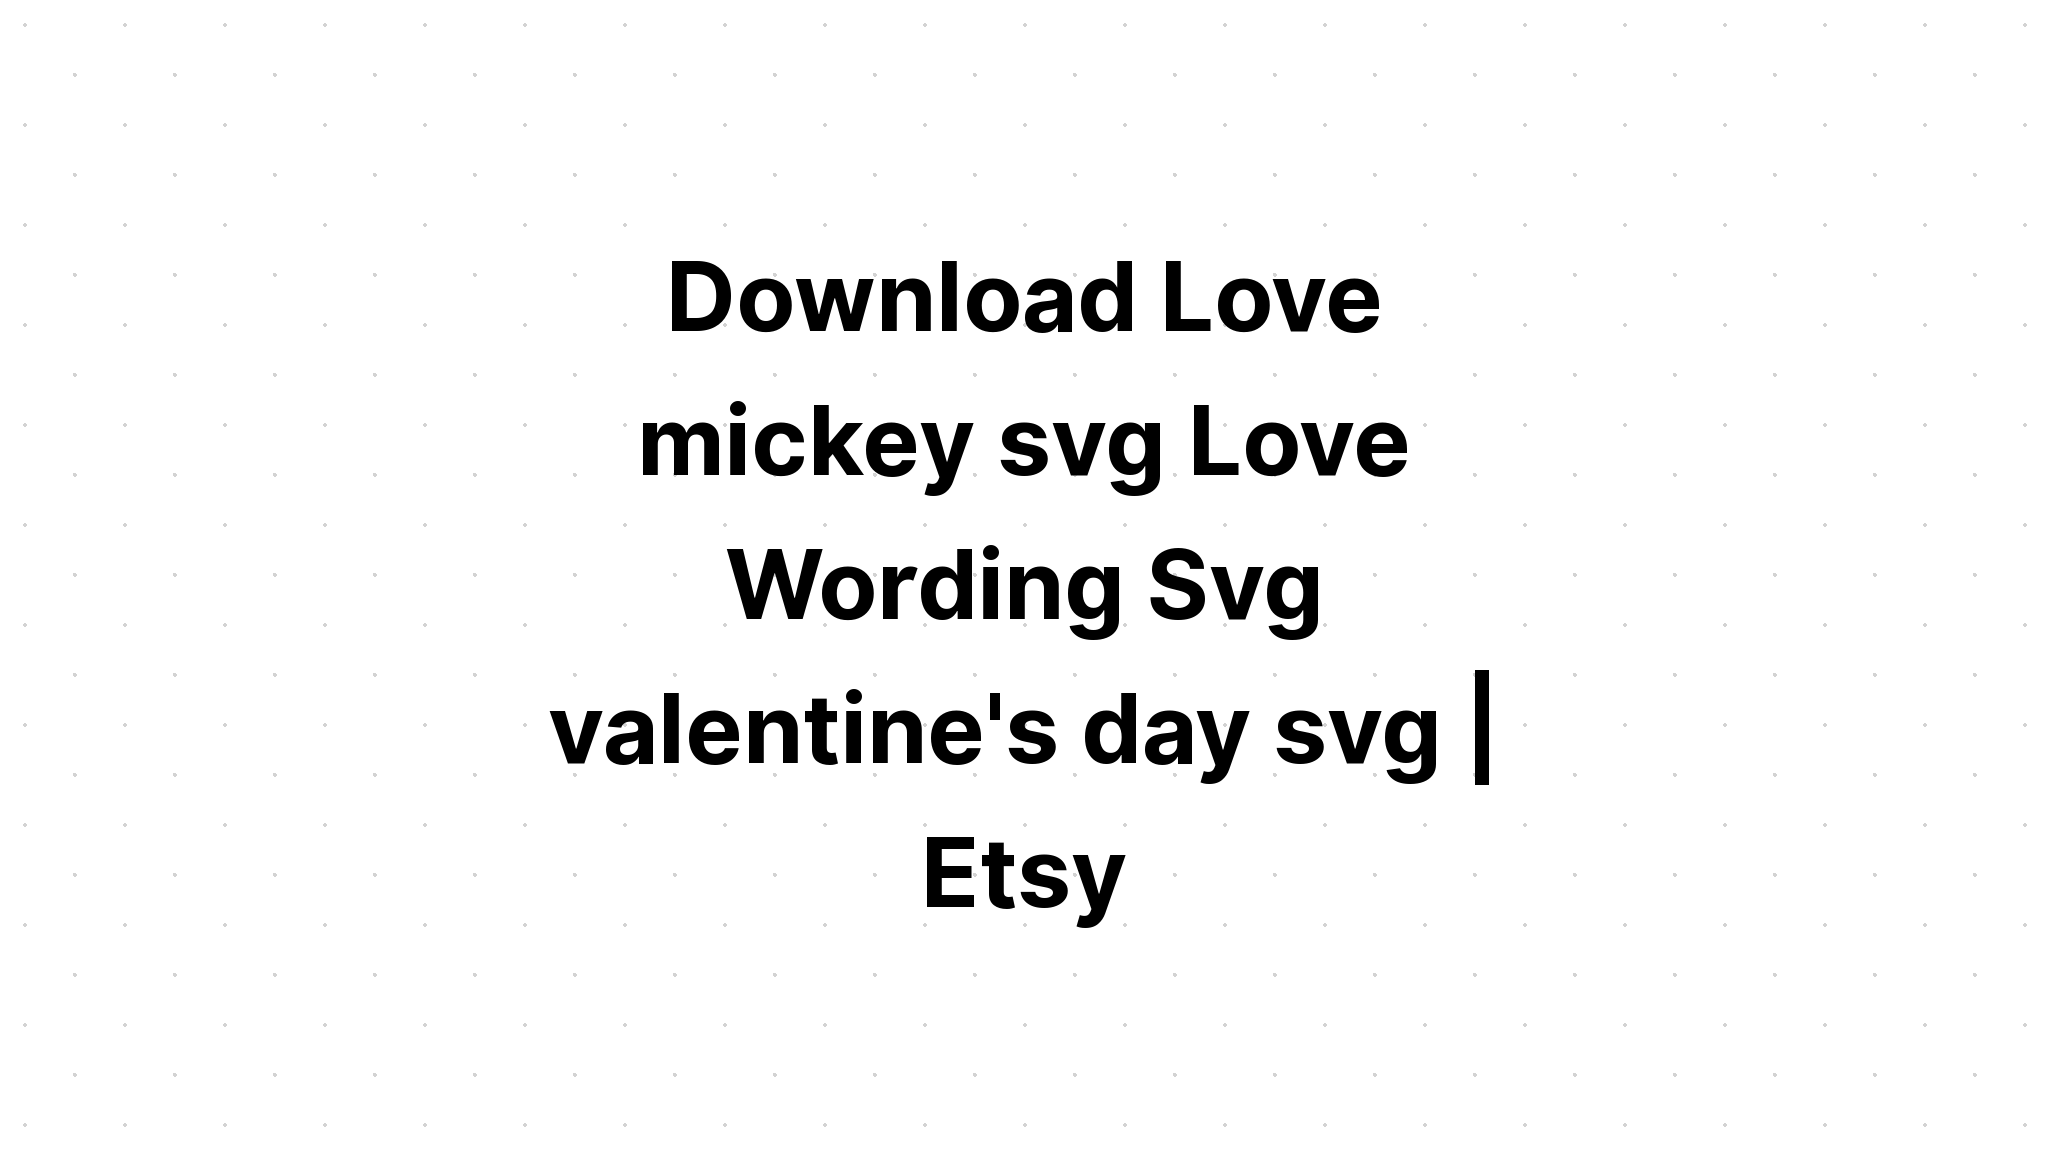 Download Love Micky Svg - Layered SVG Cut File